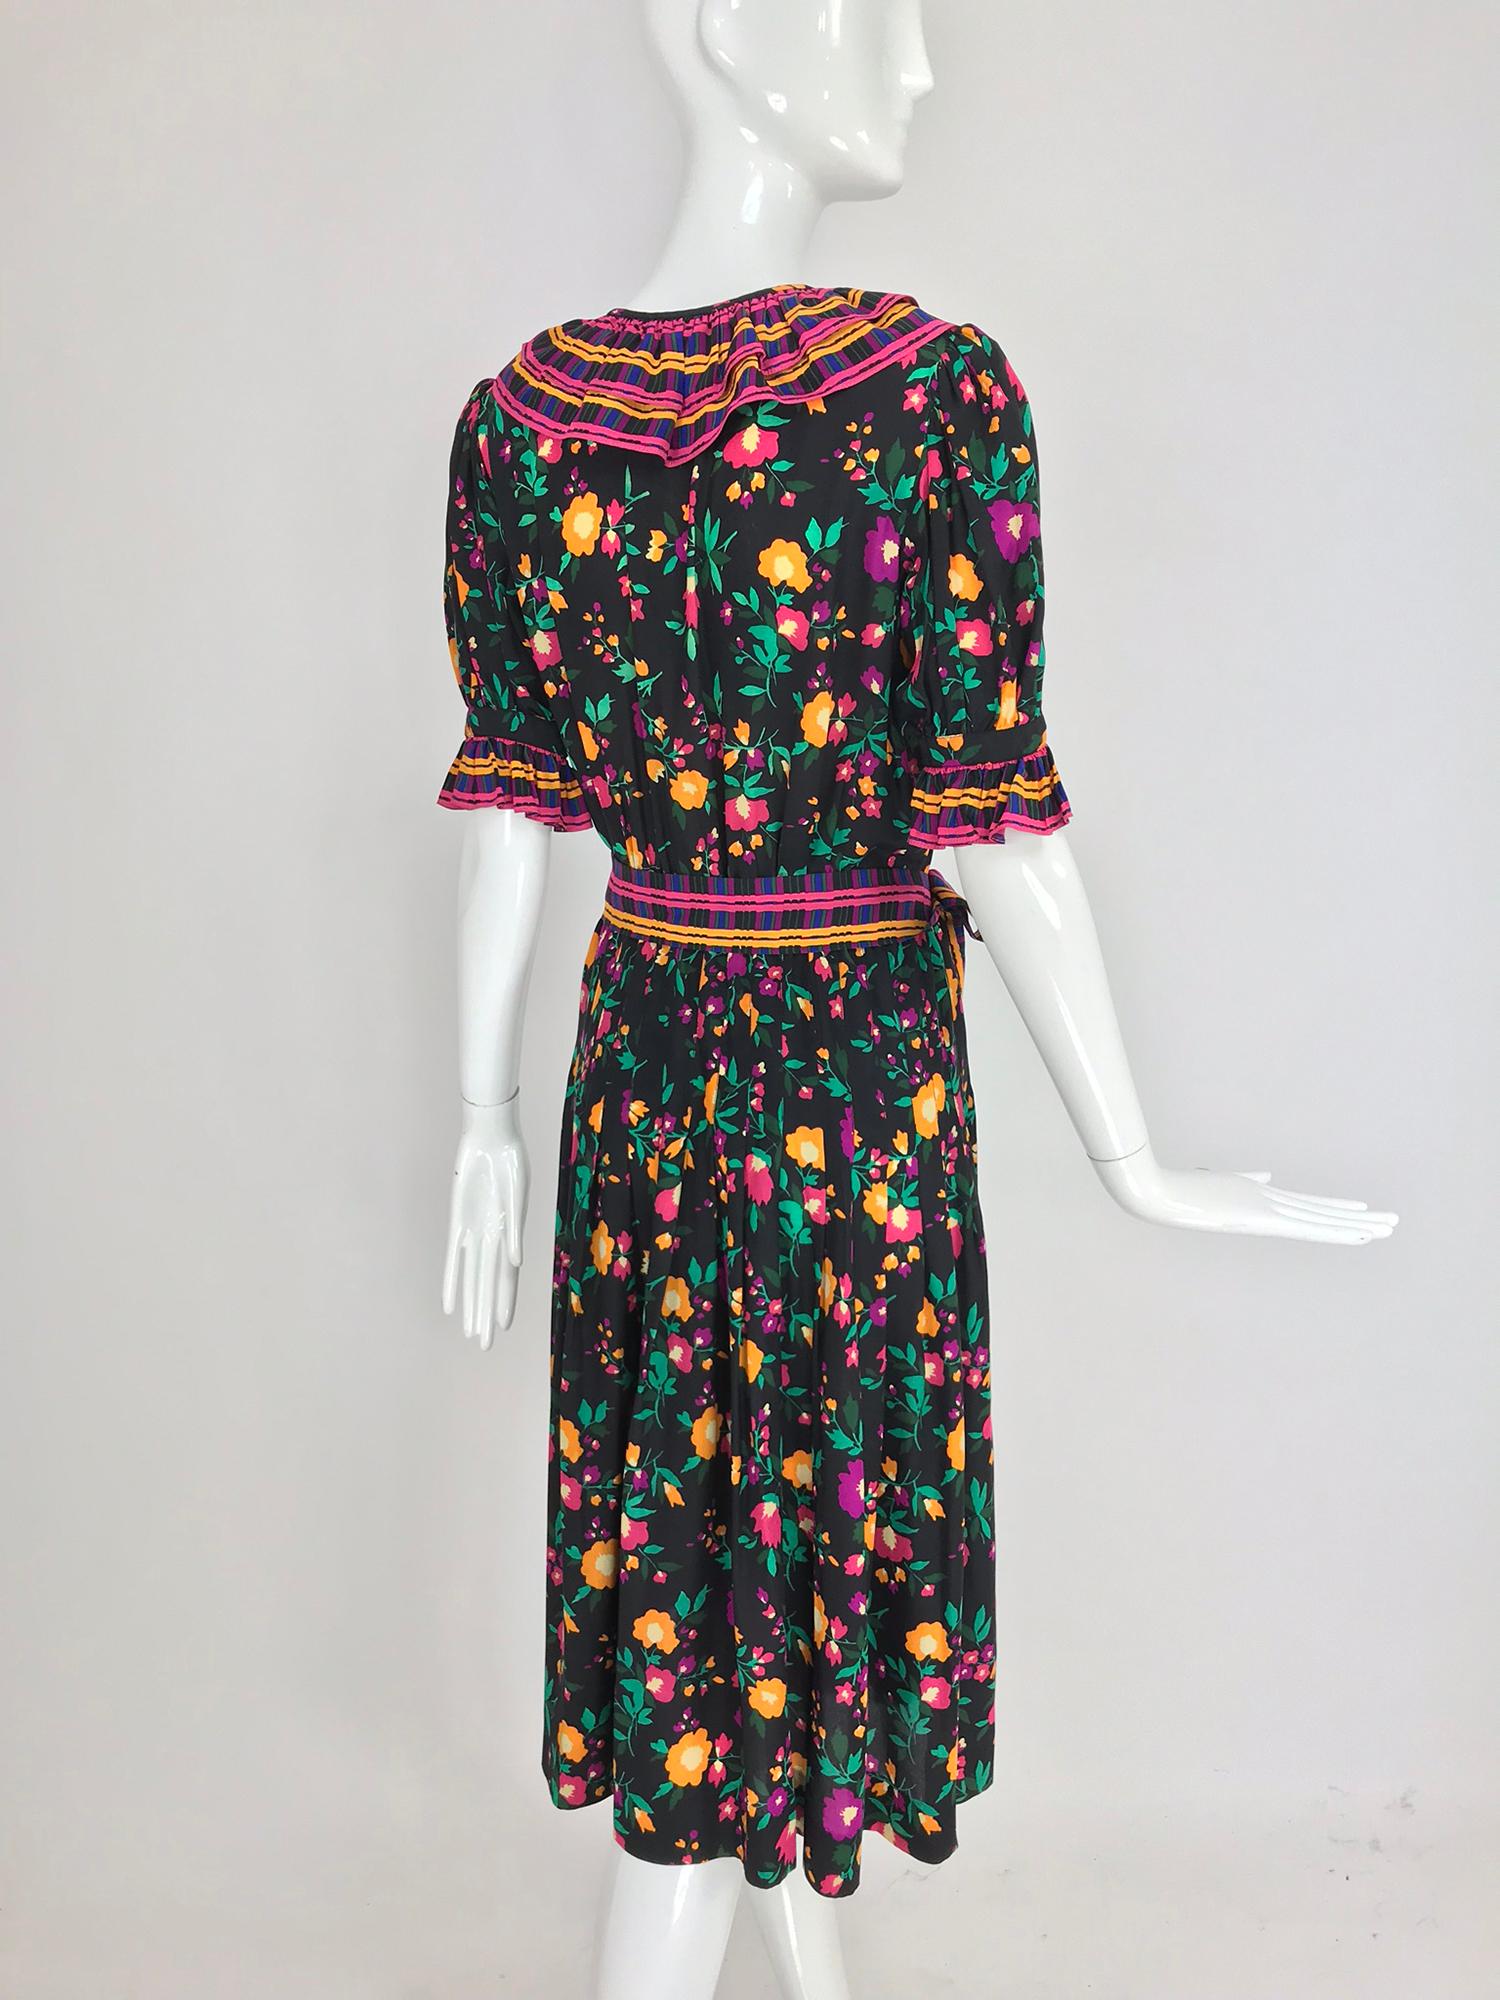 Yves Saint Laurent Rive Gauche floral silk mix print dress 1970s 3